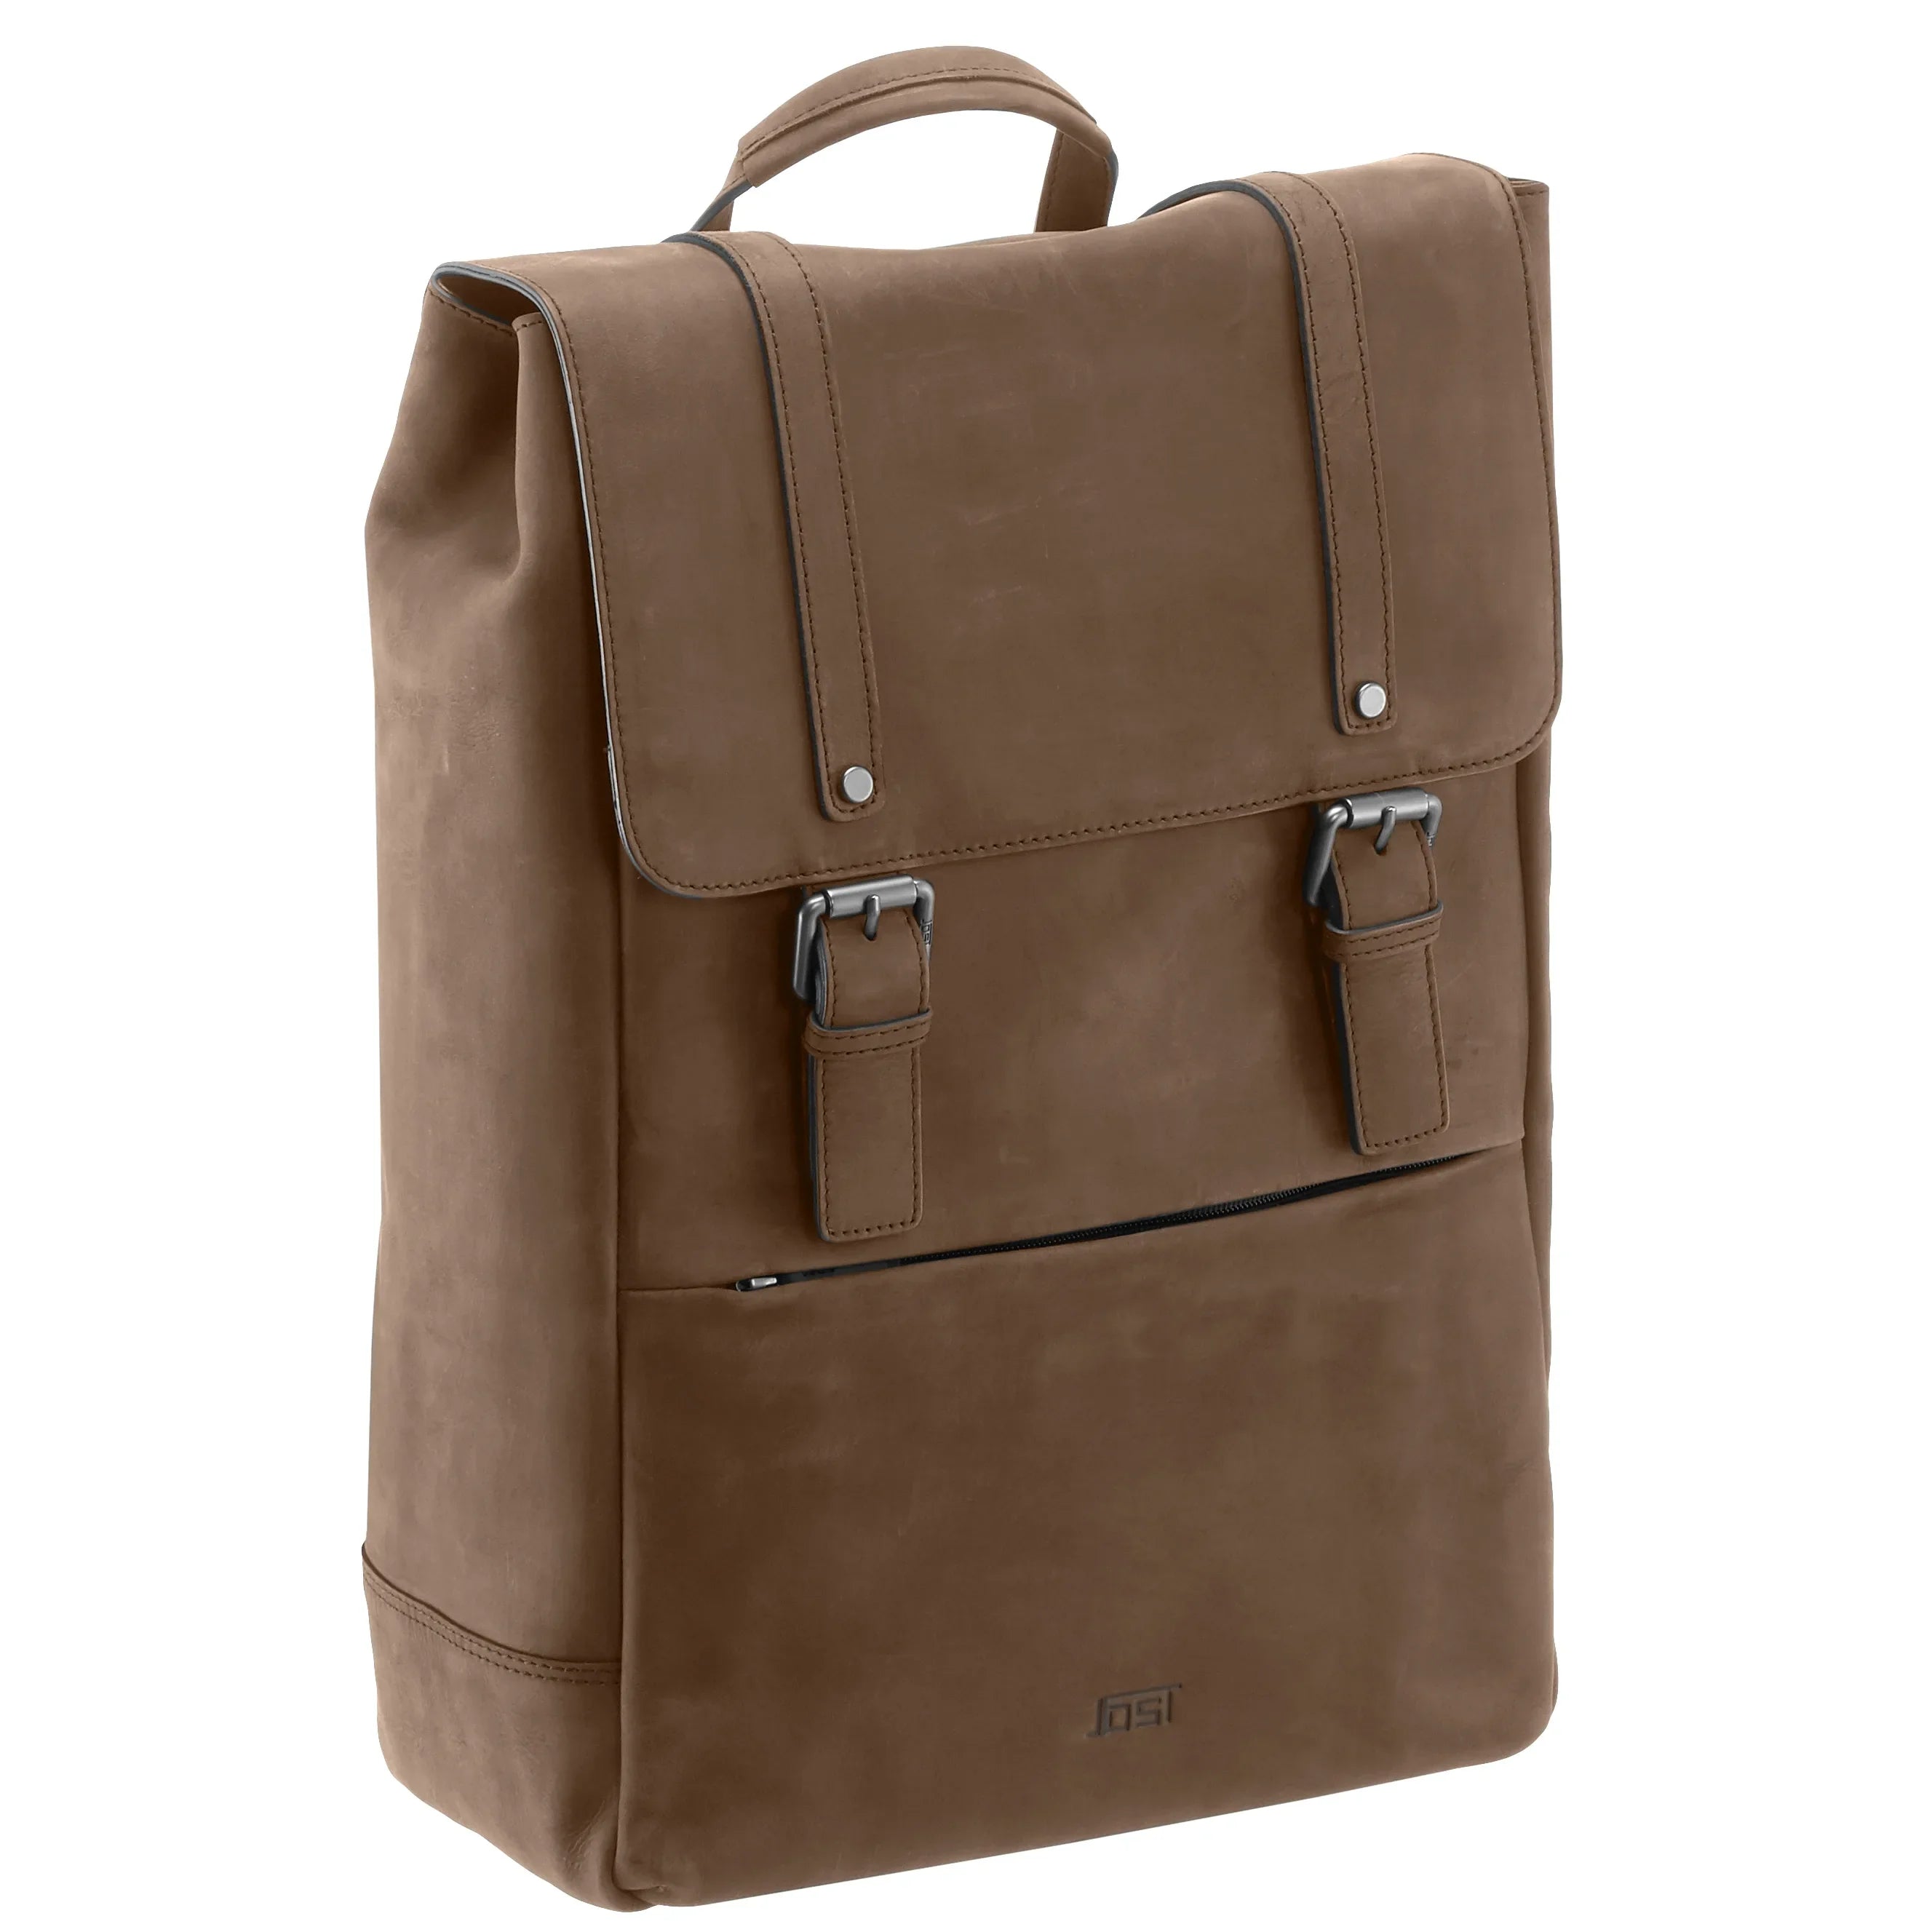 Jost Salo backpack 45 cm - brown